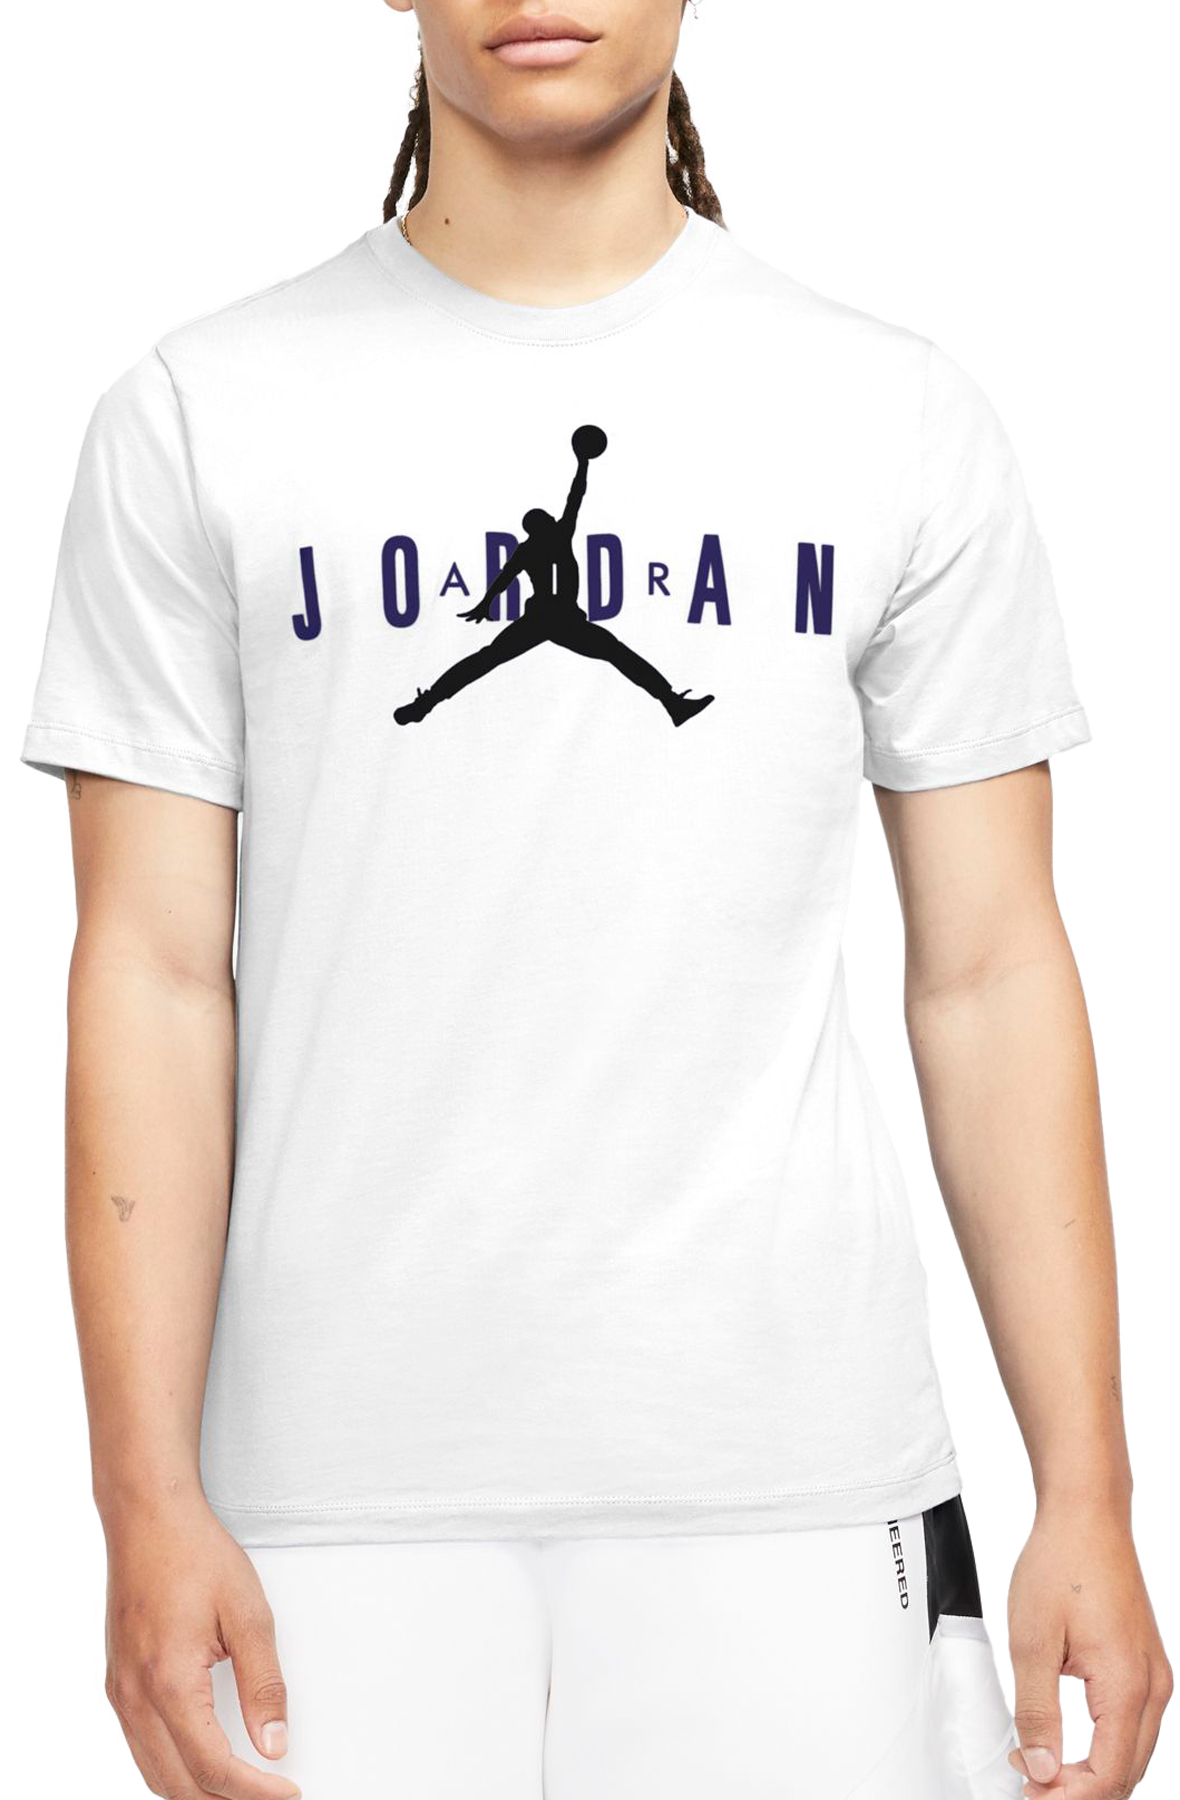 black and white jordan t shirt